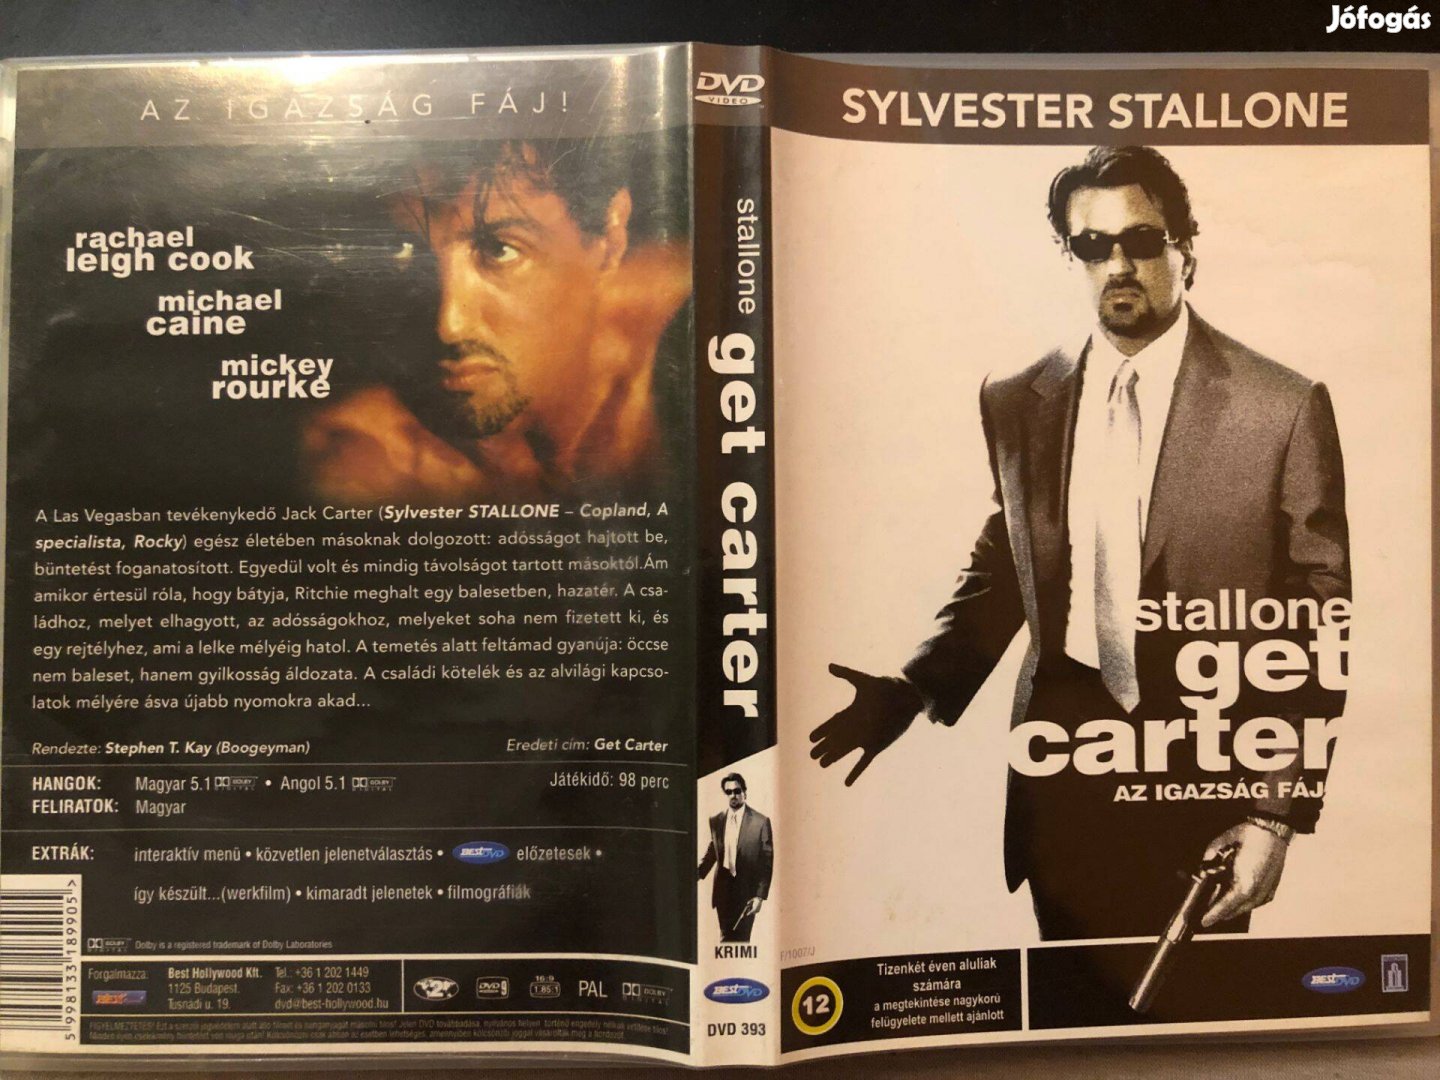 Get Carter Az igazság fáj (Stallone) DVD